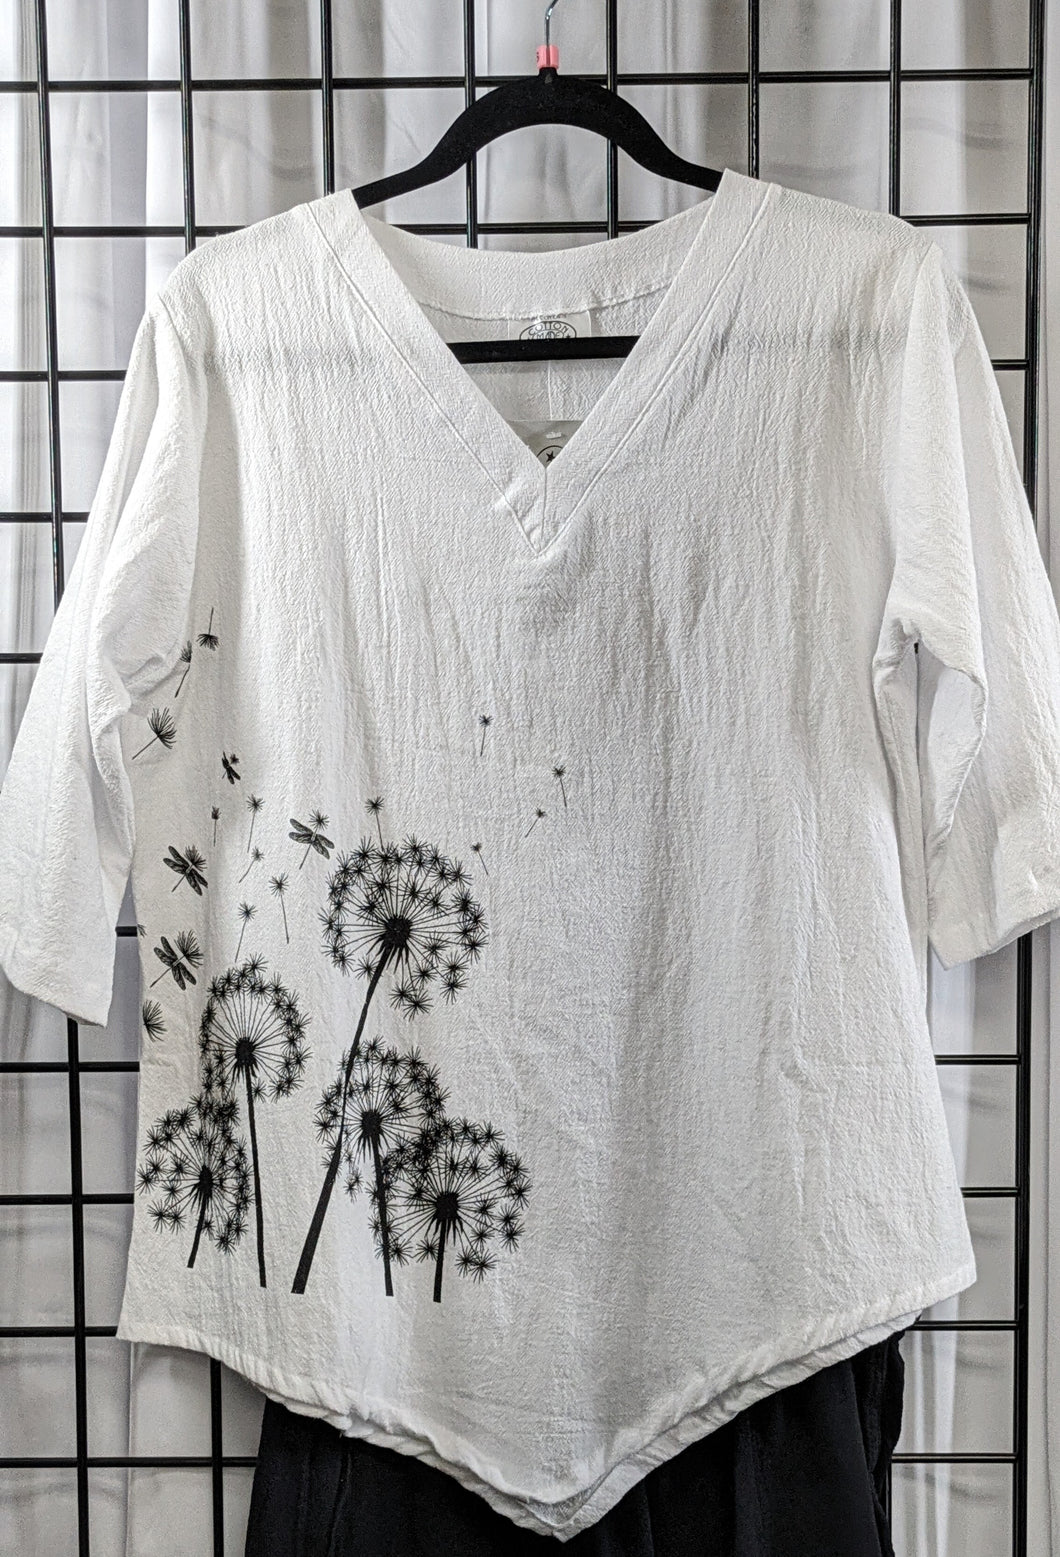 Women's 100% Cotton White top with Dandelion design